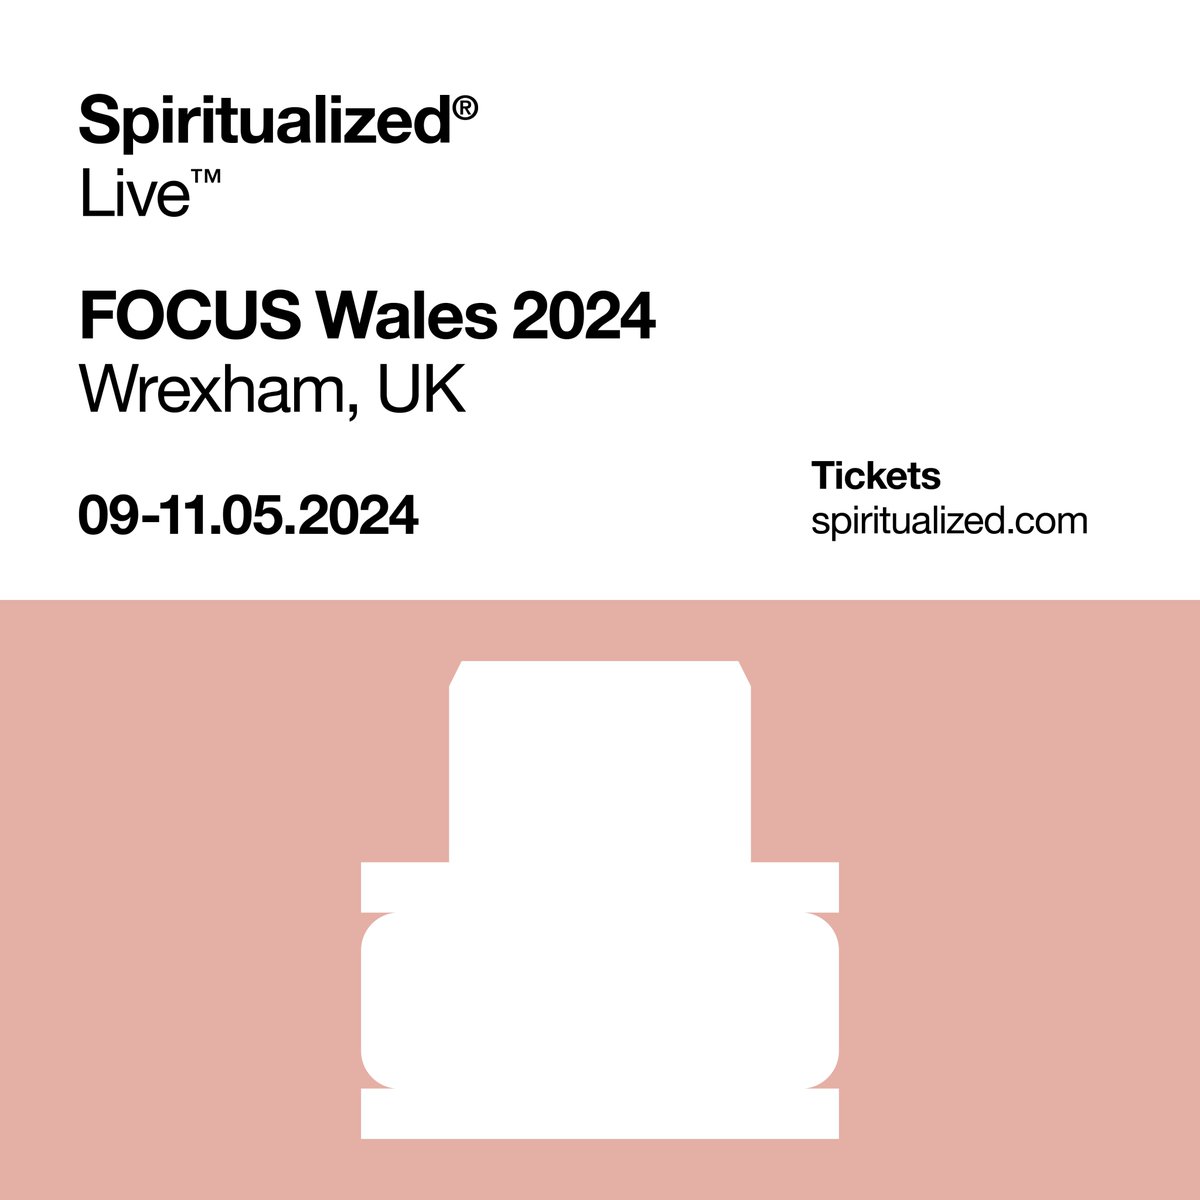 Spiritualized® Live™ FOCUS Wales Wrexham, Wales 09.05.24 - 11.05.24 spiritualized.com focuswales.com